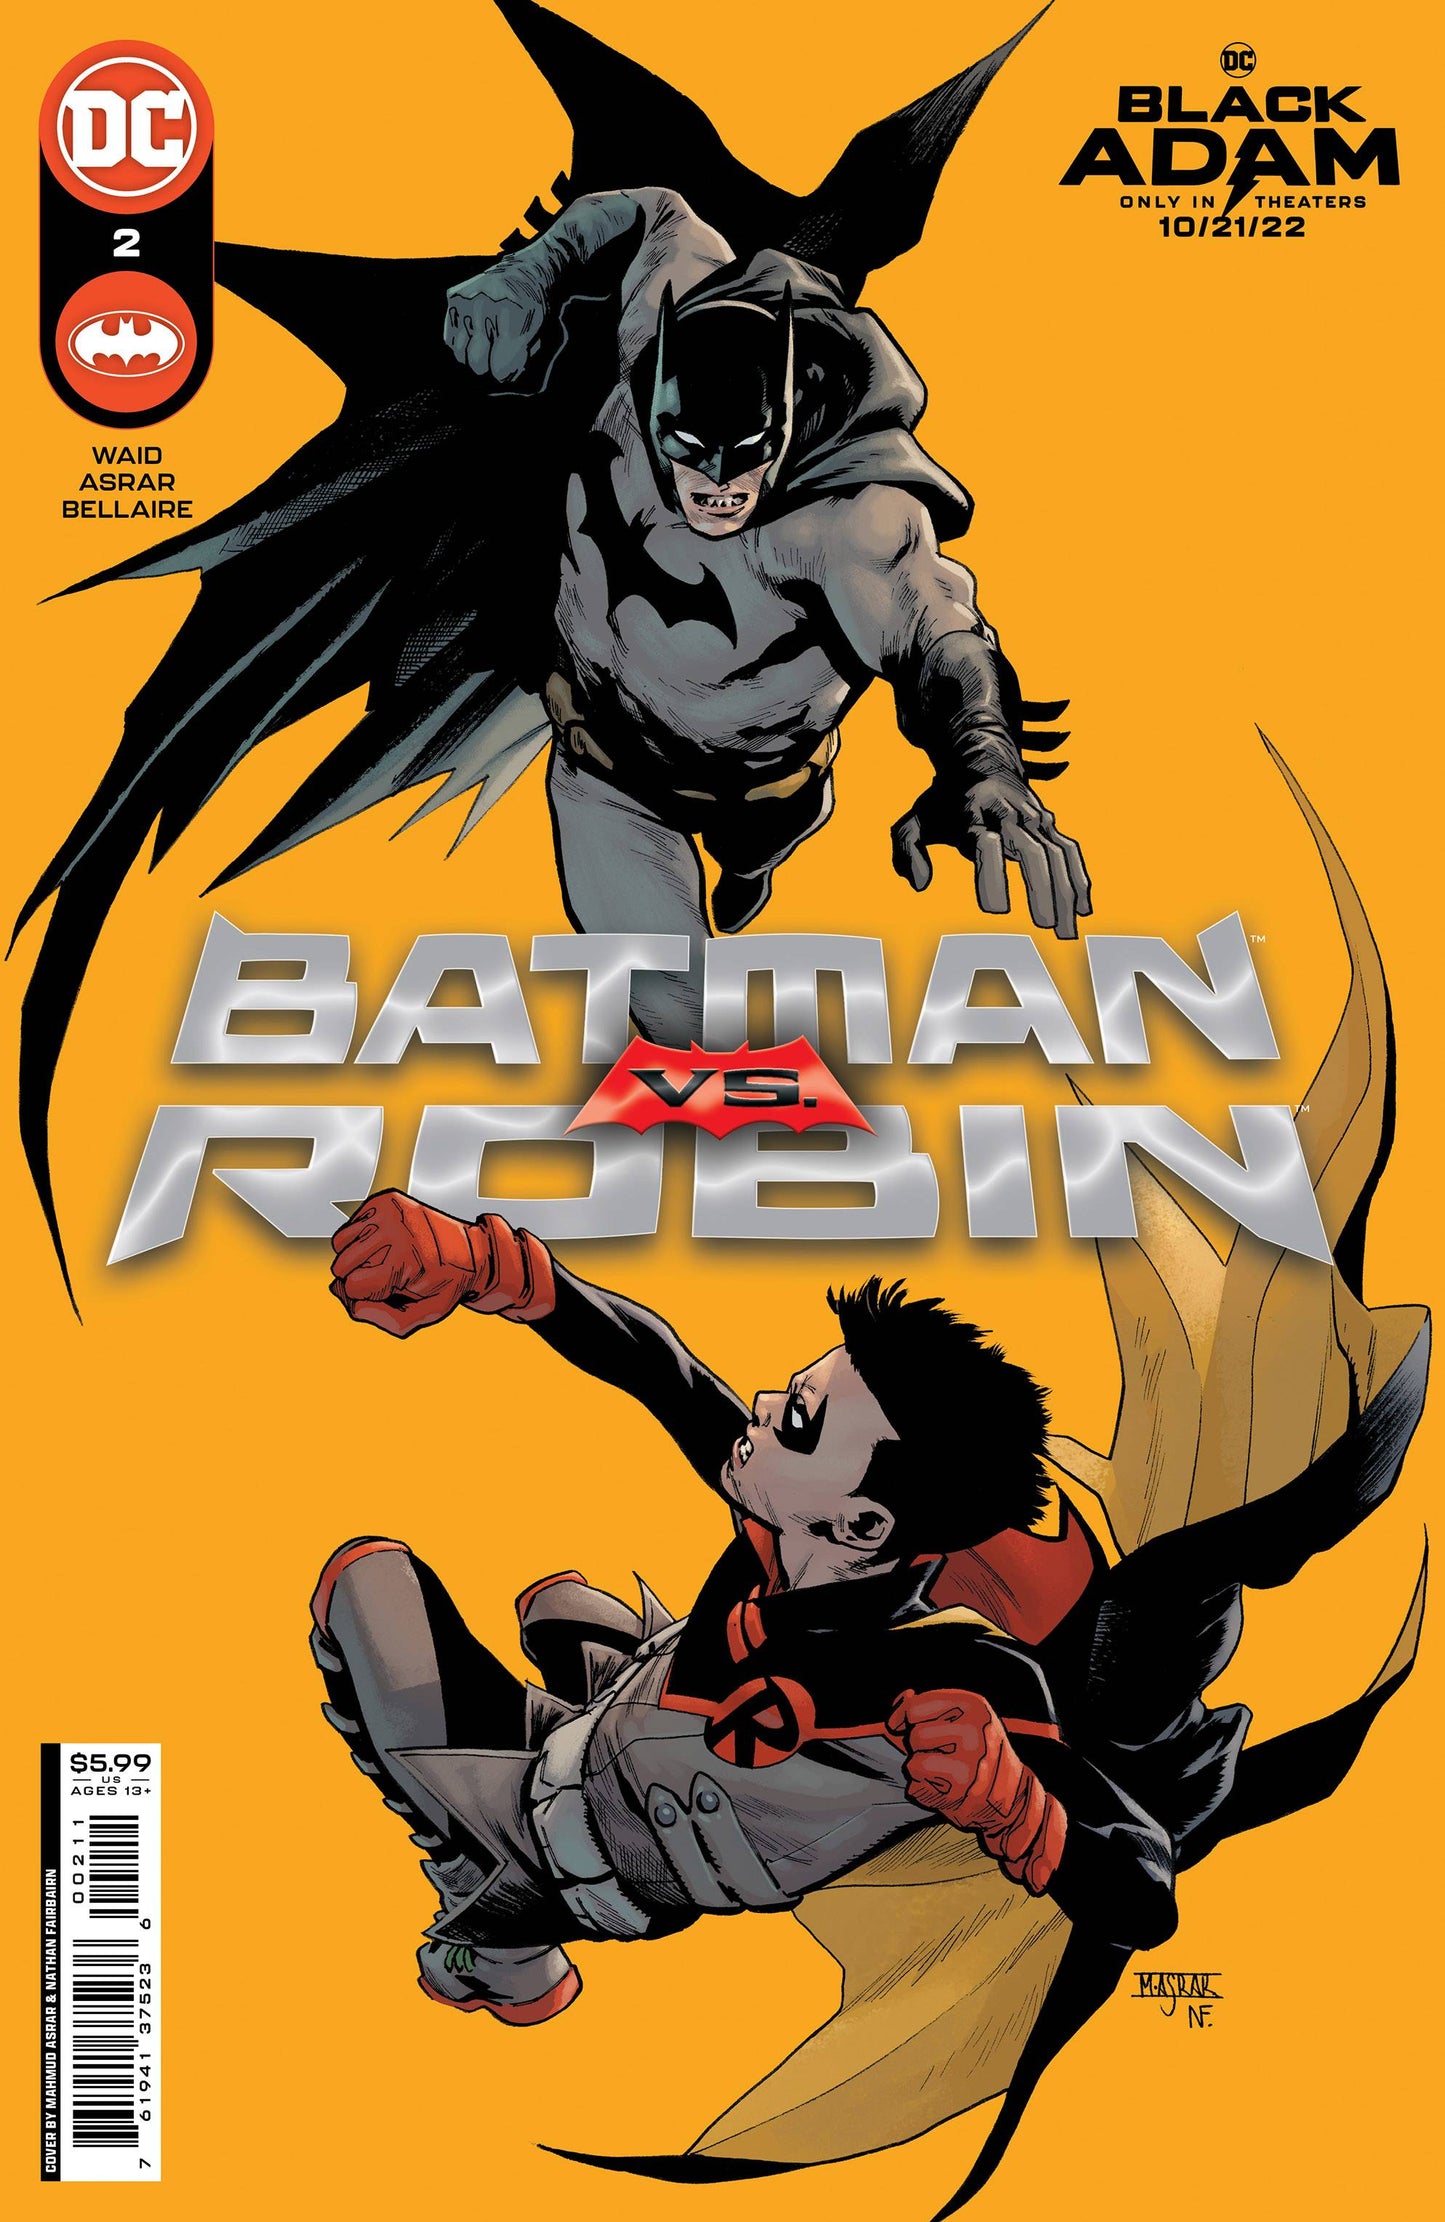 BATMAN VS ROBIN #2 (OF 5)